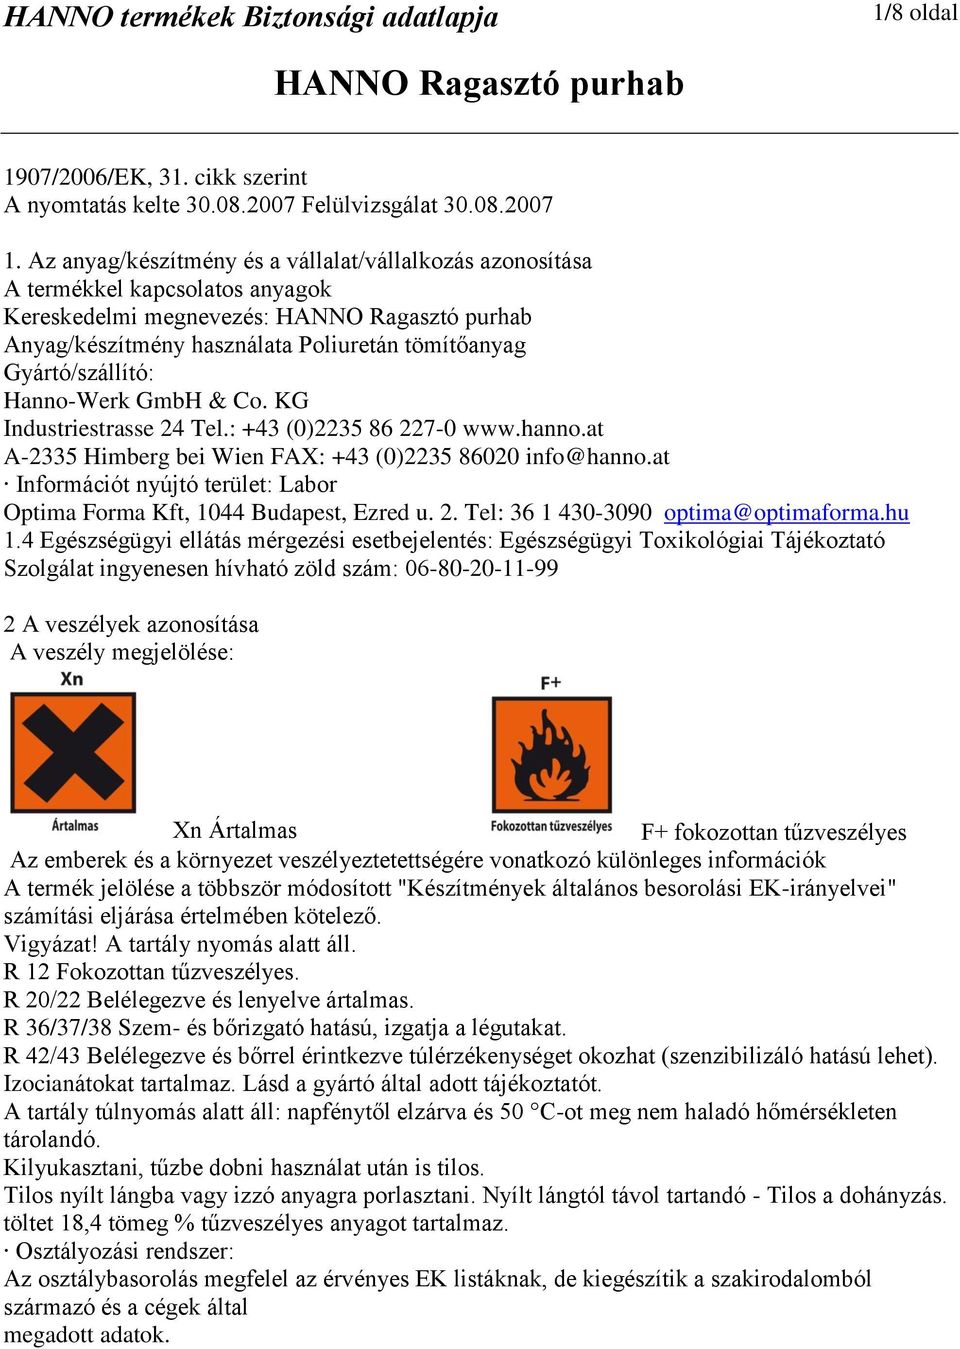 & Co. KG Industriestrasse 24 Tel.: +43 (0)2235 86 227-0 www.hanno.at A-2335 Himberg bei Wien FAX: +43 (0)2235 86020 info@hanno.